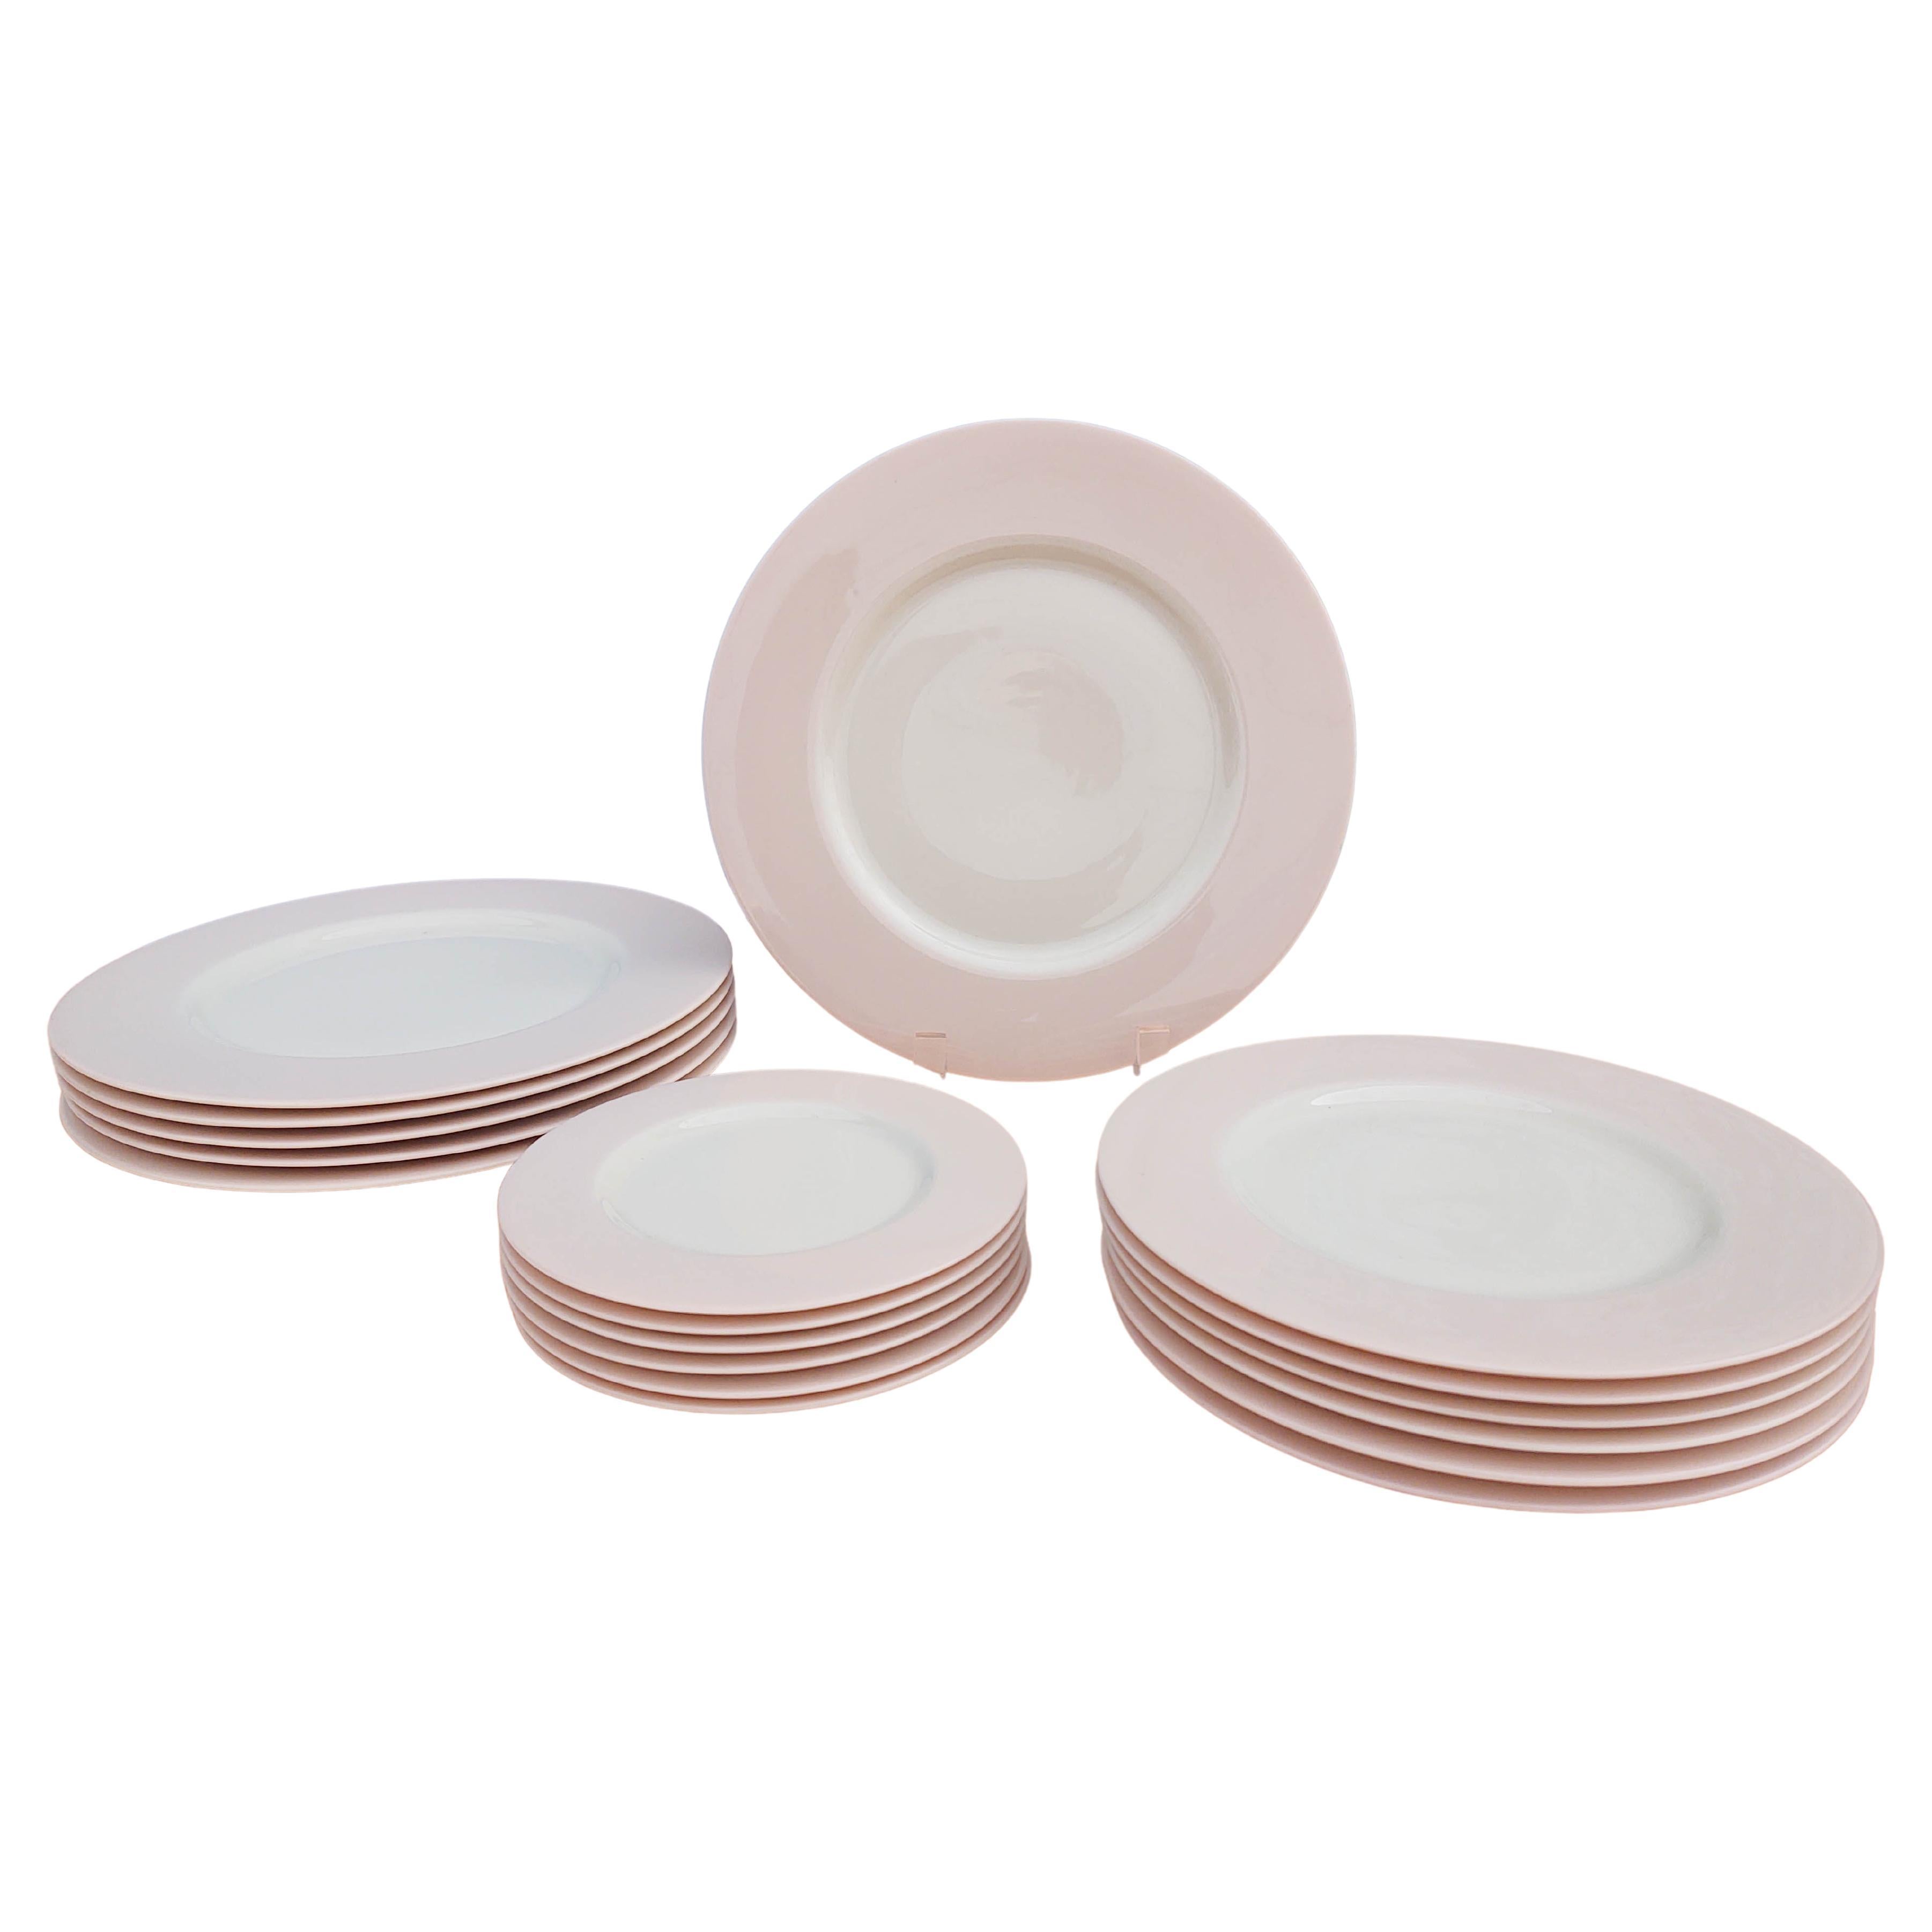 18 Piece Vintage Pink & White Porcelain Dinnerware Plates Set, Set for 6